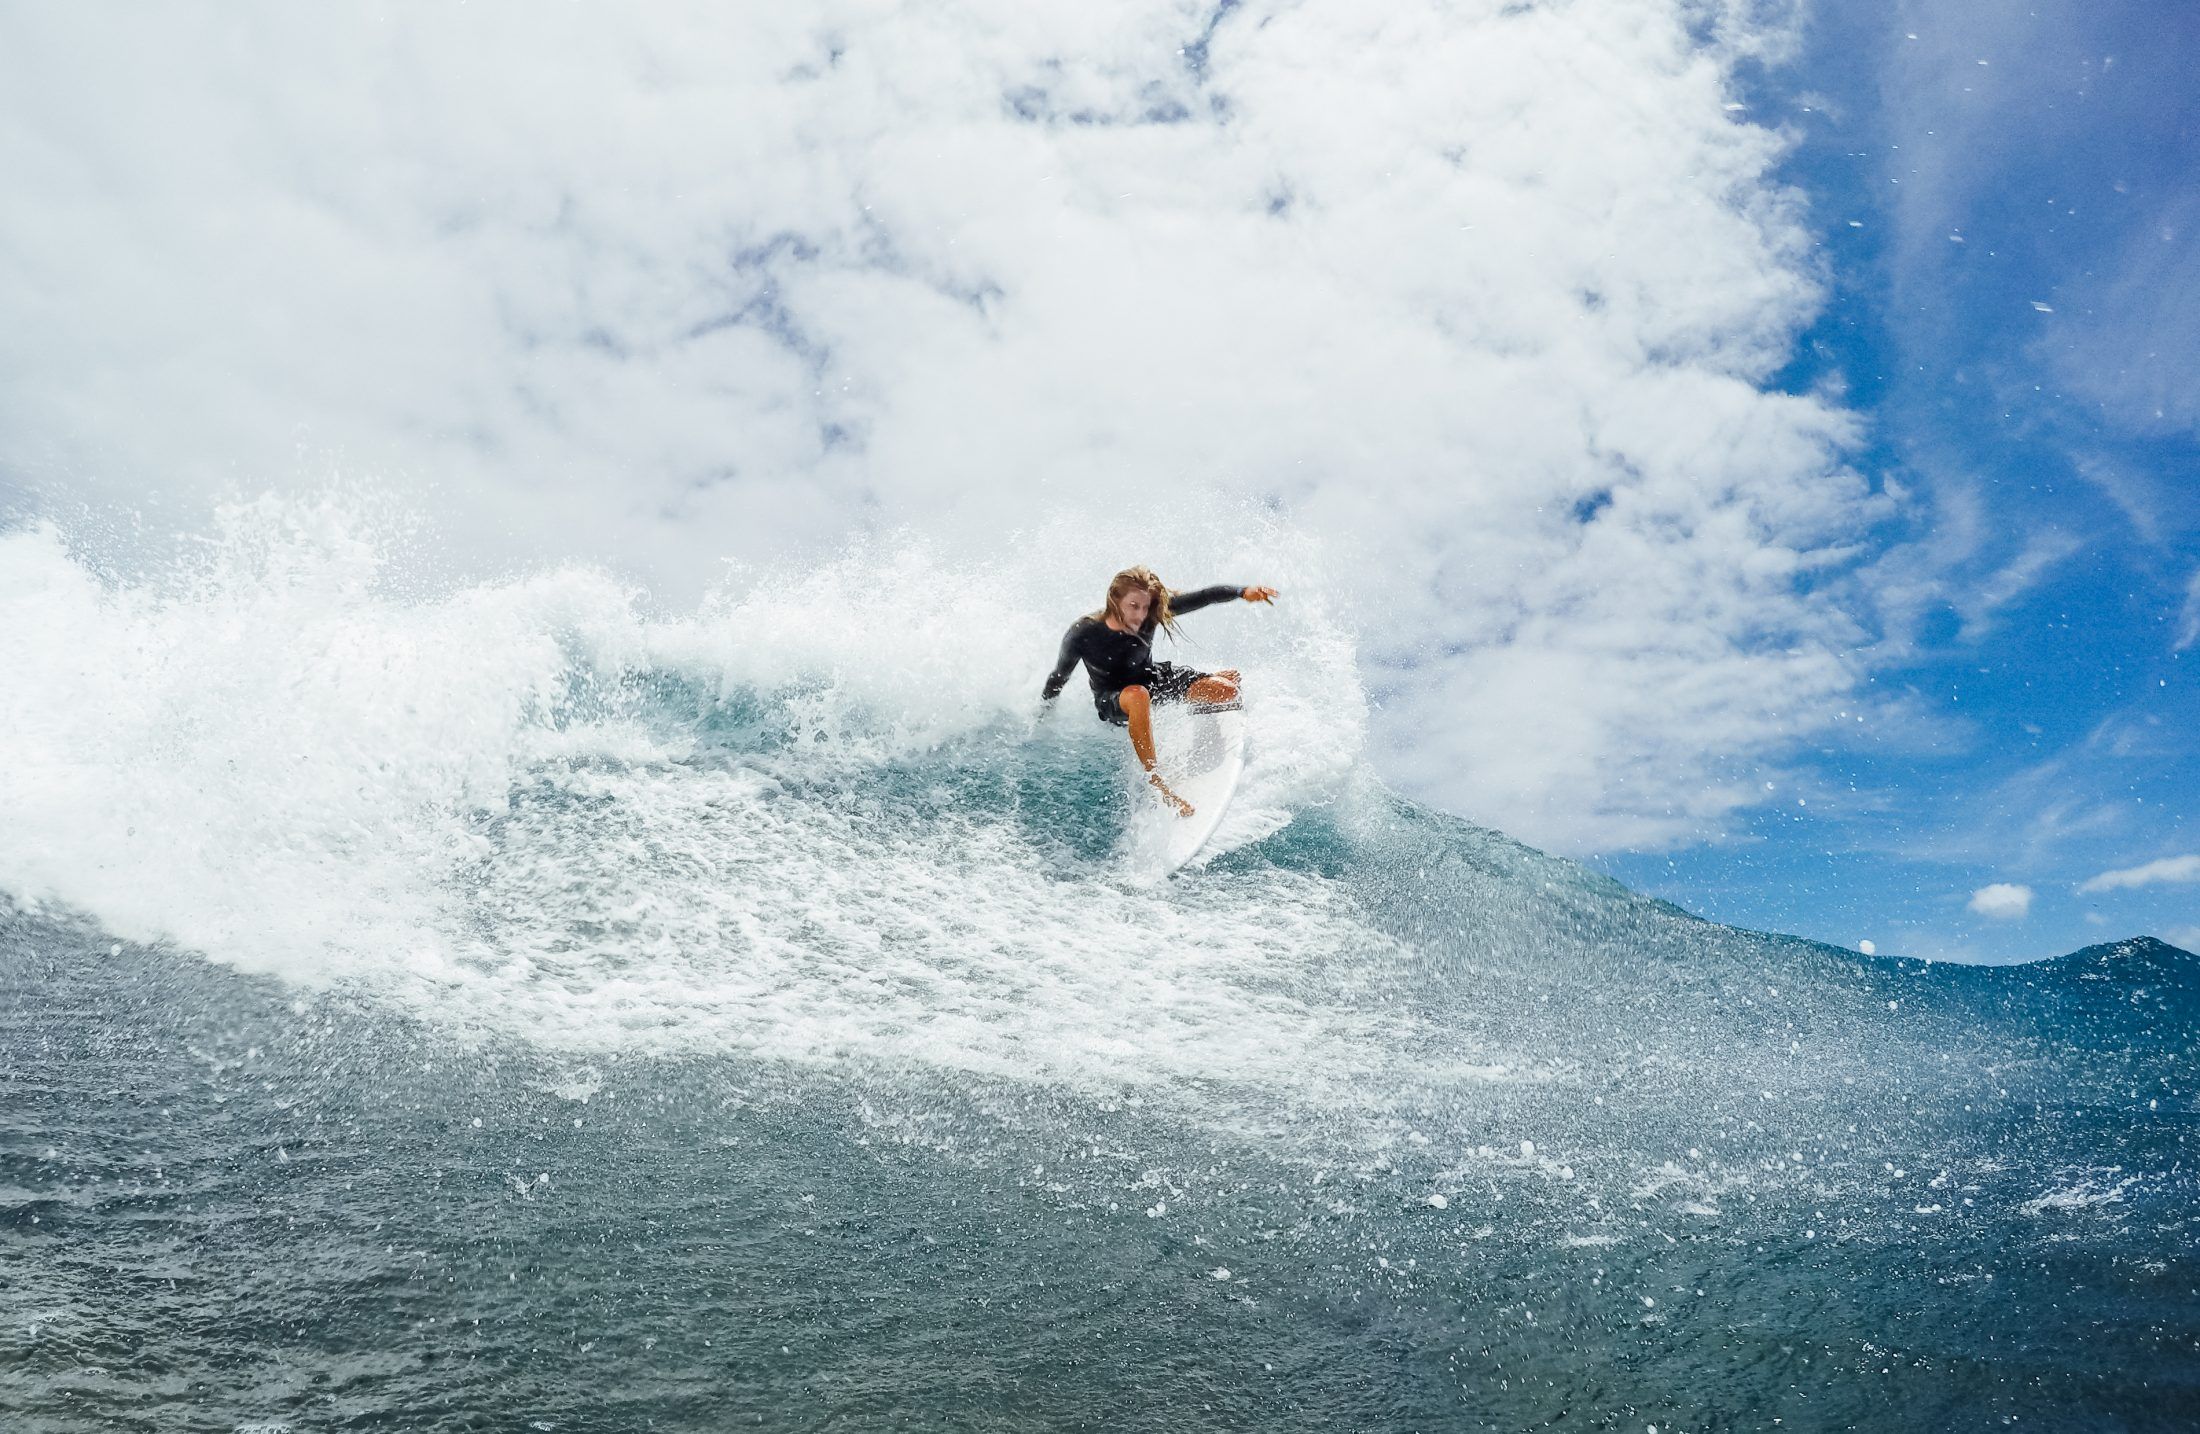 Surfing shot 3 - Photographer Zach Sanders @stuckonarock